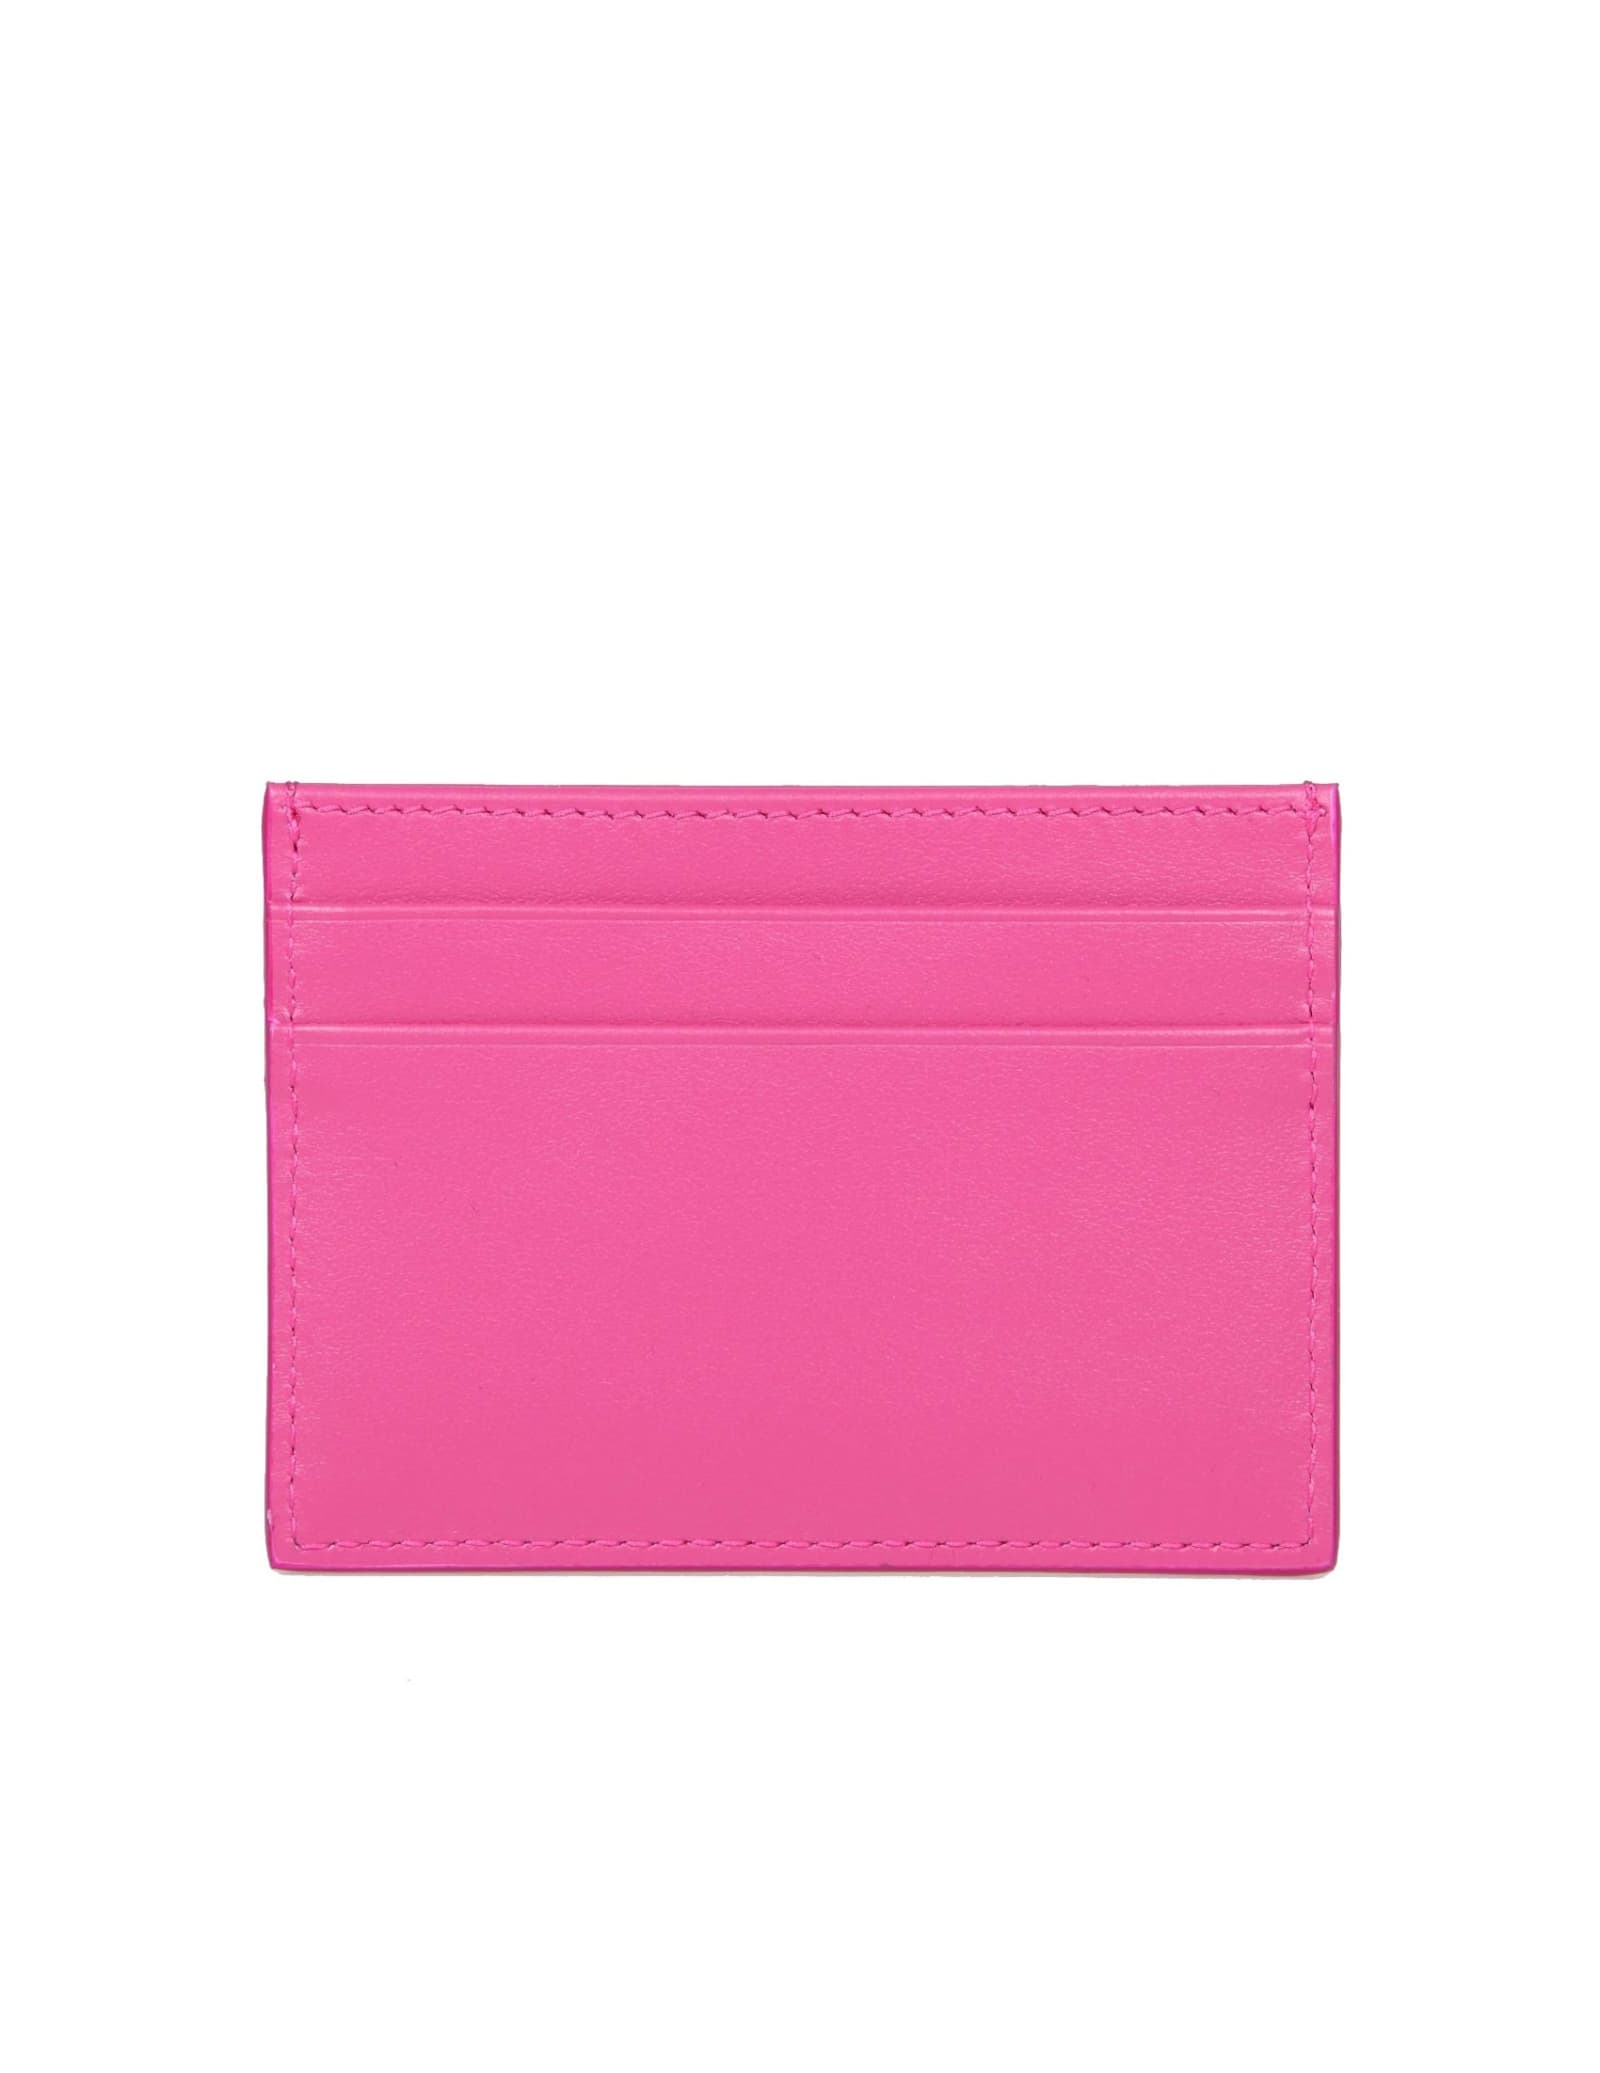 Dolce & Gabbana Dg Logo Leather Card Case in Pink